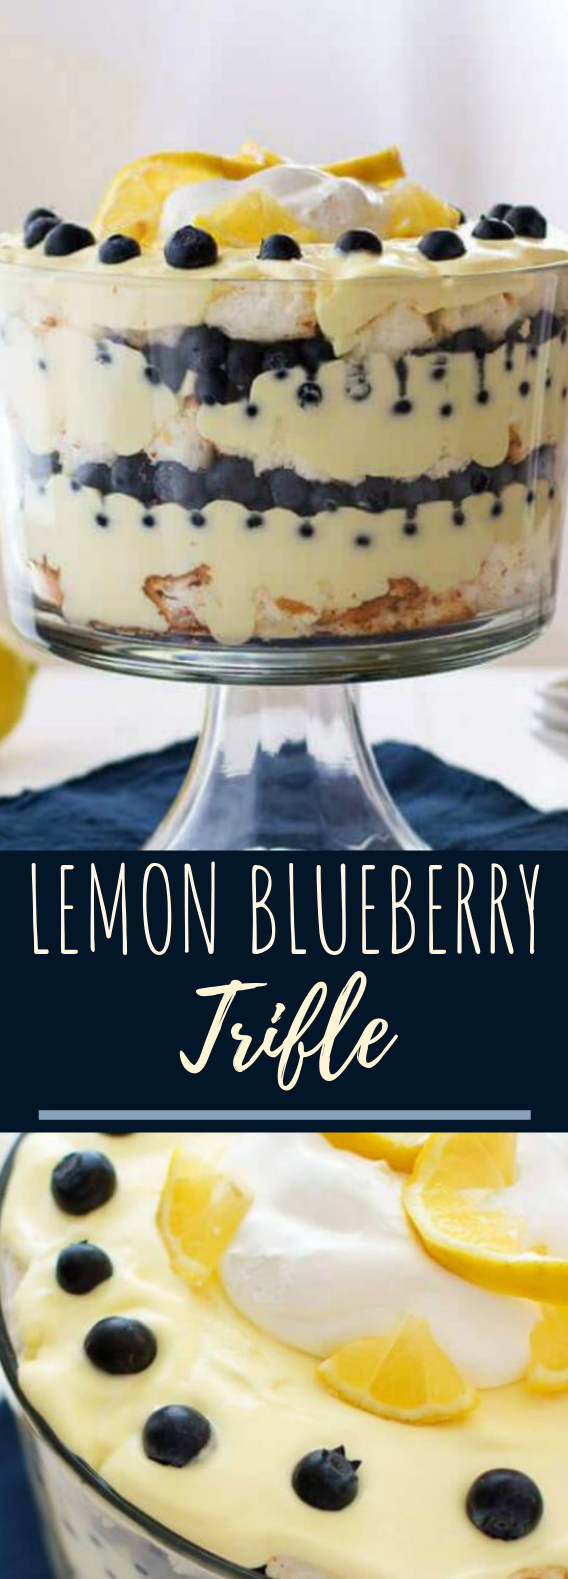 Lemon Blueberry Trifle #summer #dessert